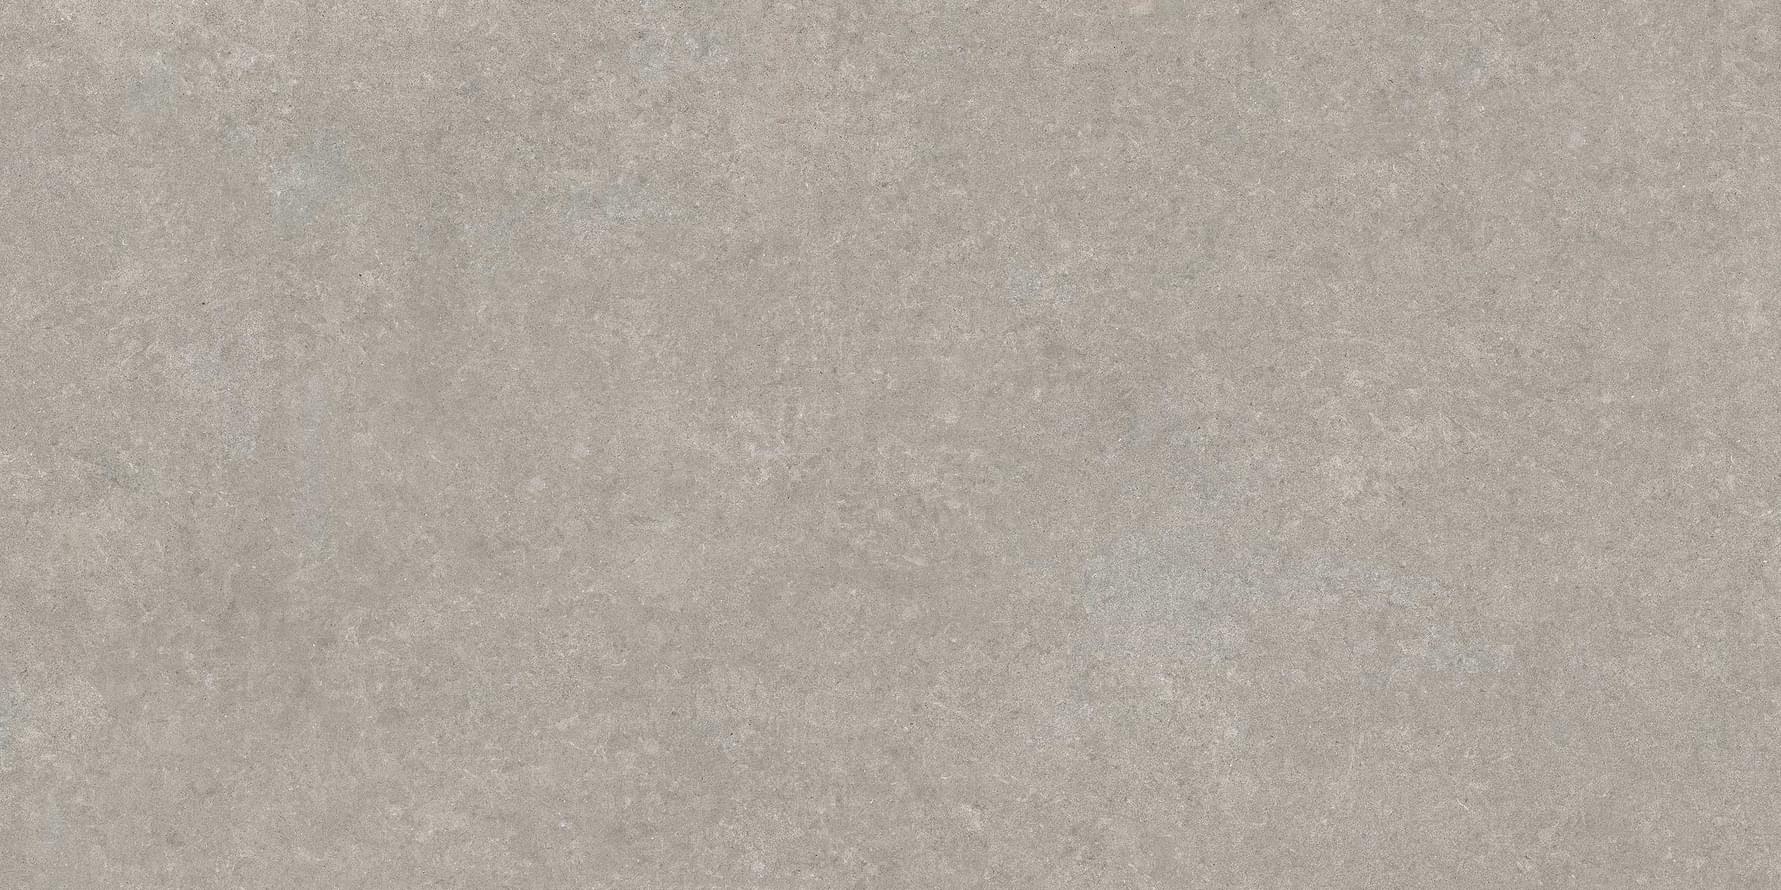 Cerim Elemental Stone Grey Sandstone Naturale 30x60